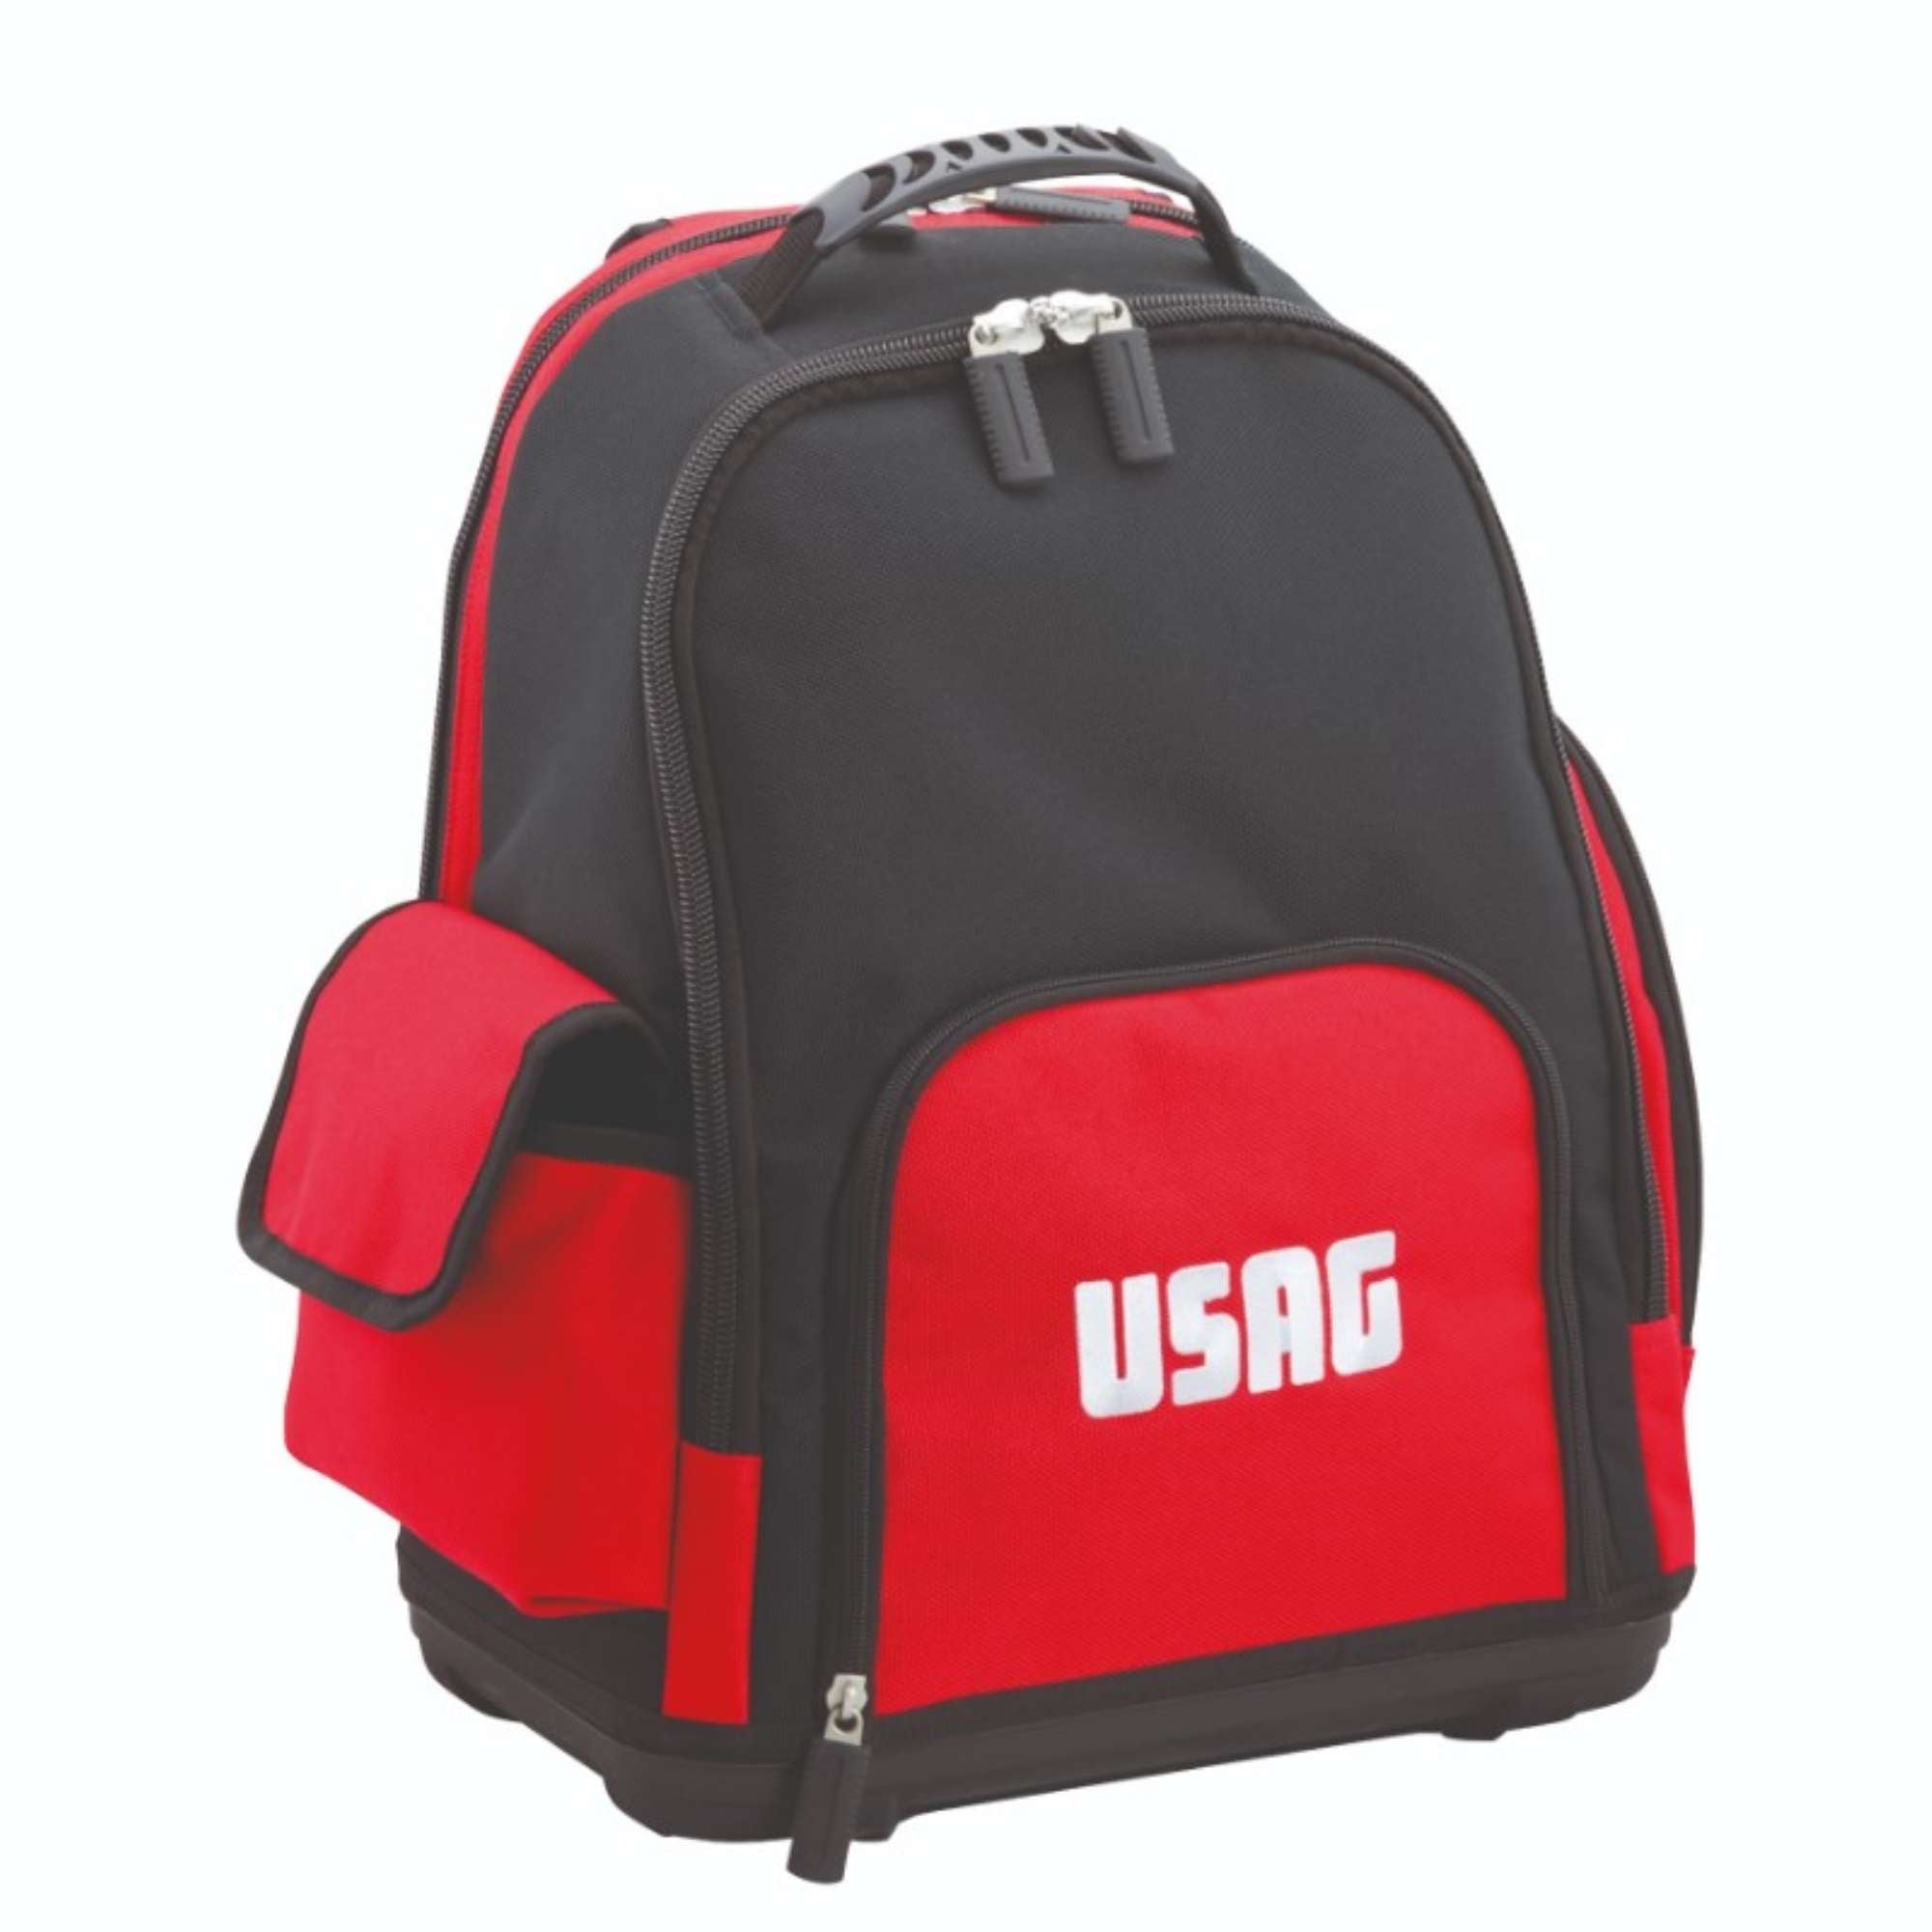 Professional tool backpack 30L capacity - Usag U00070004